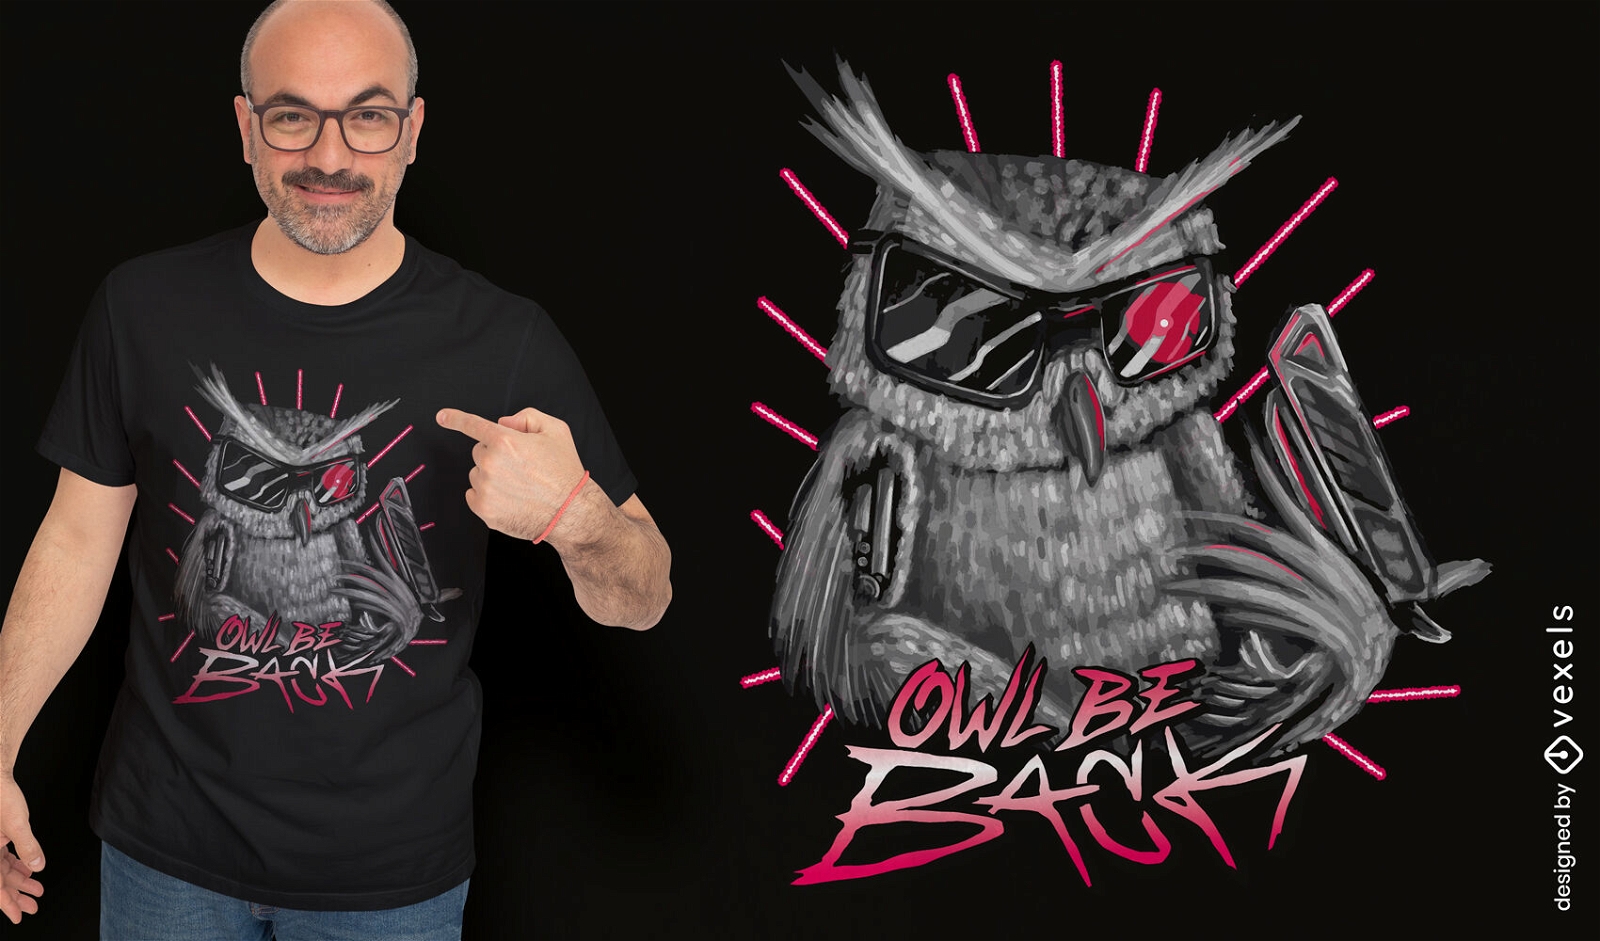 Owl animal with sunglasses t-shirt design